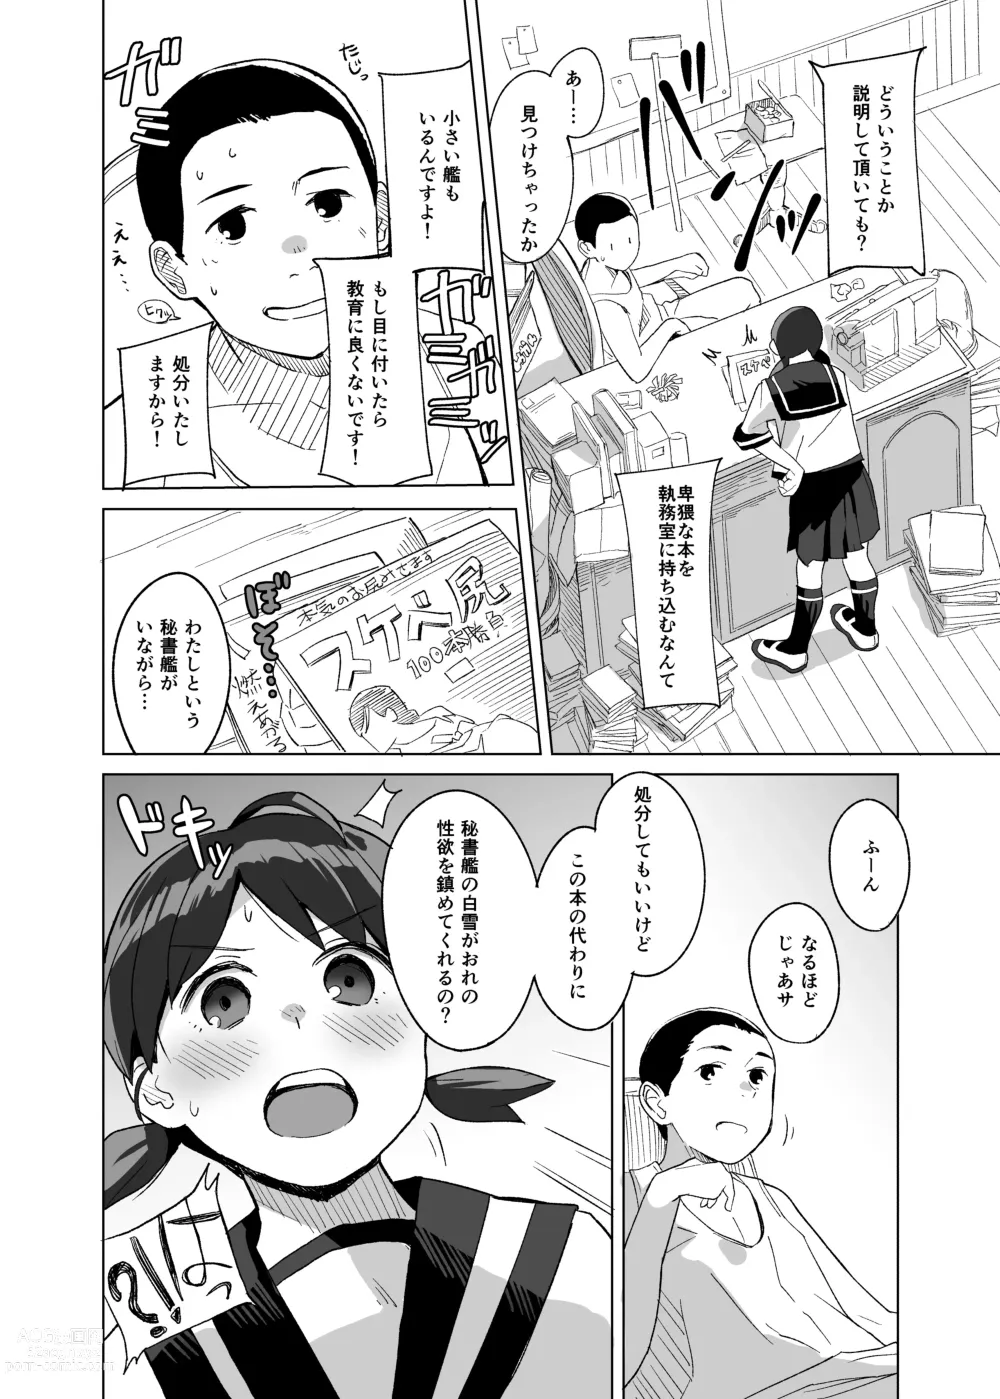 Page 4 of doujinshi Tanpopo